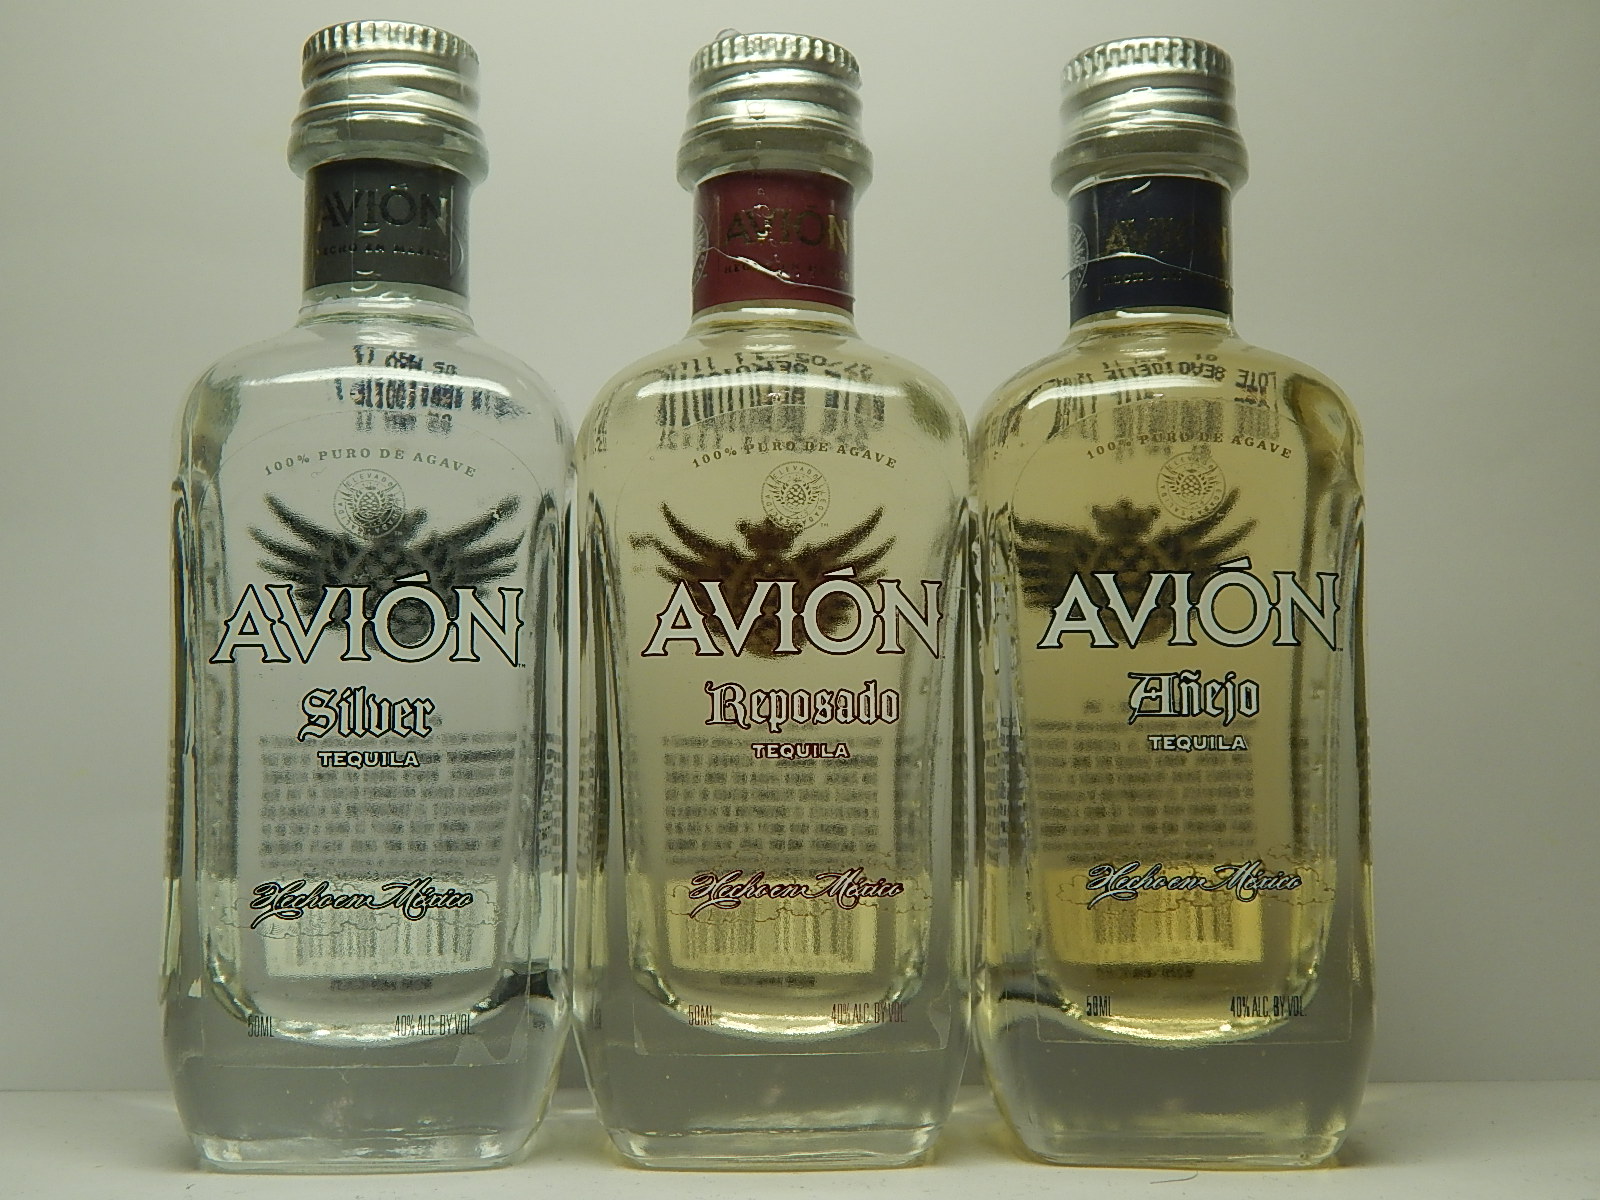 AVION Silver - Reposado - Aňejo Tequila